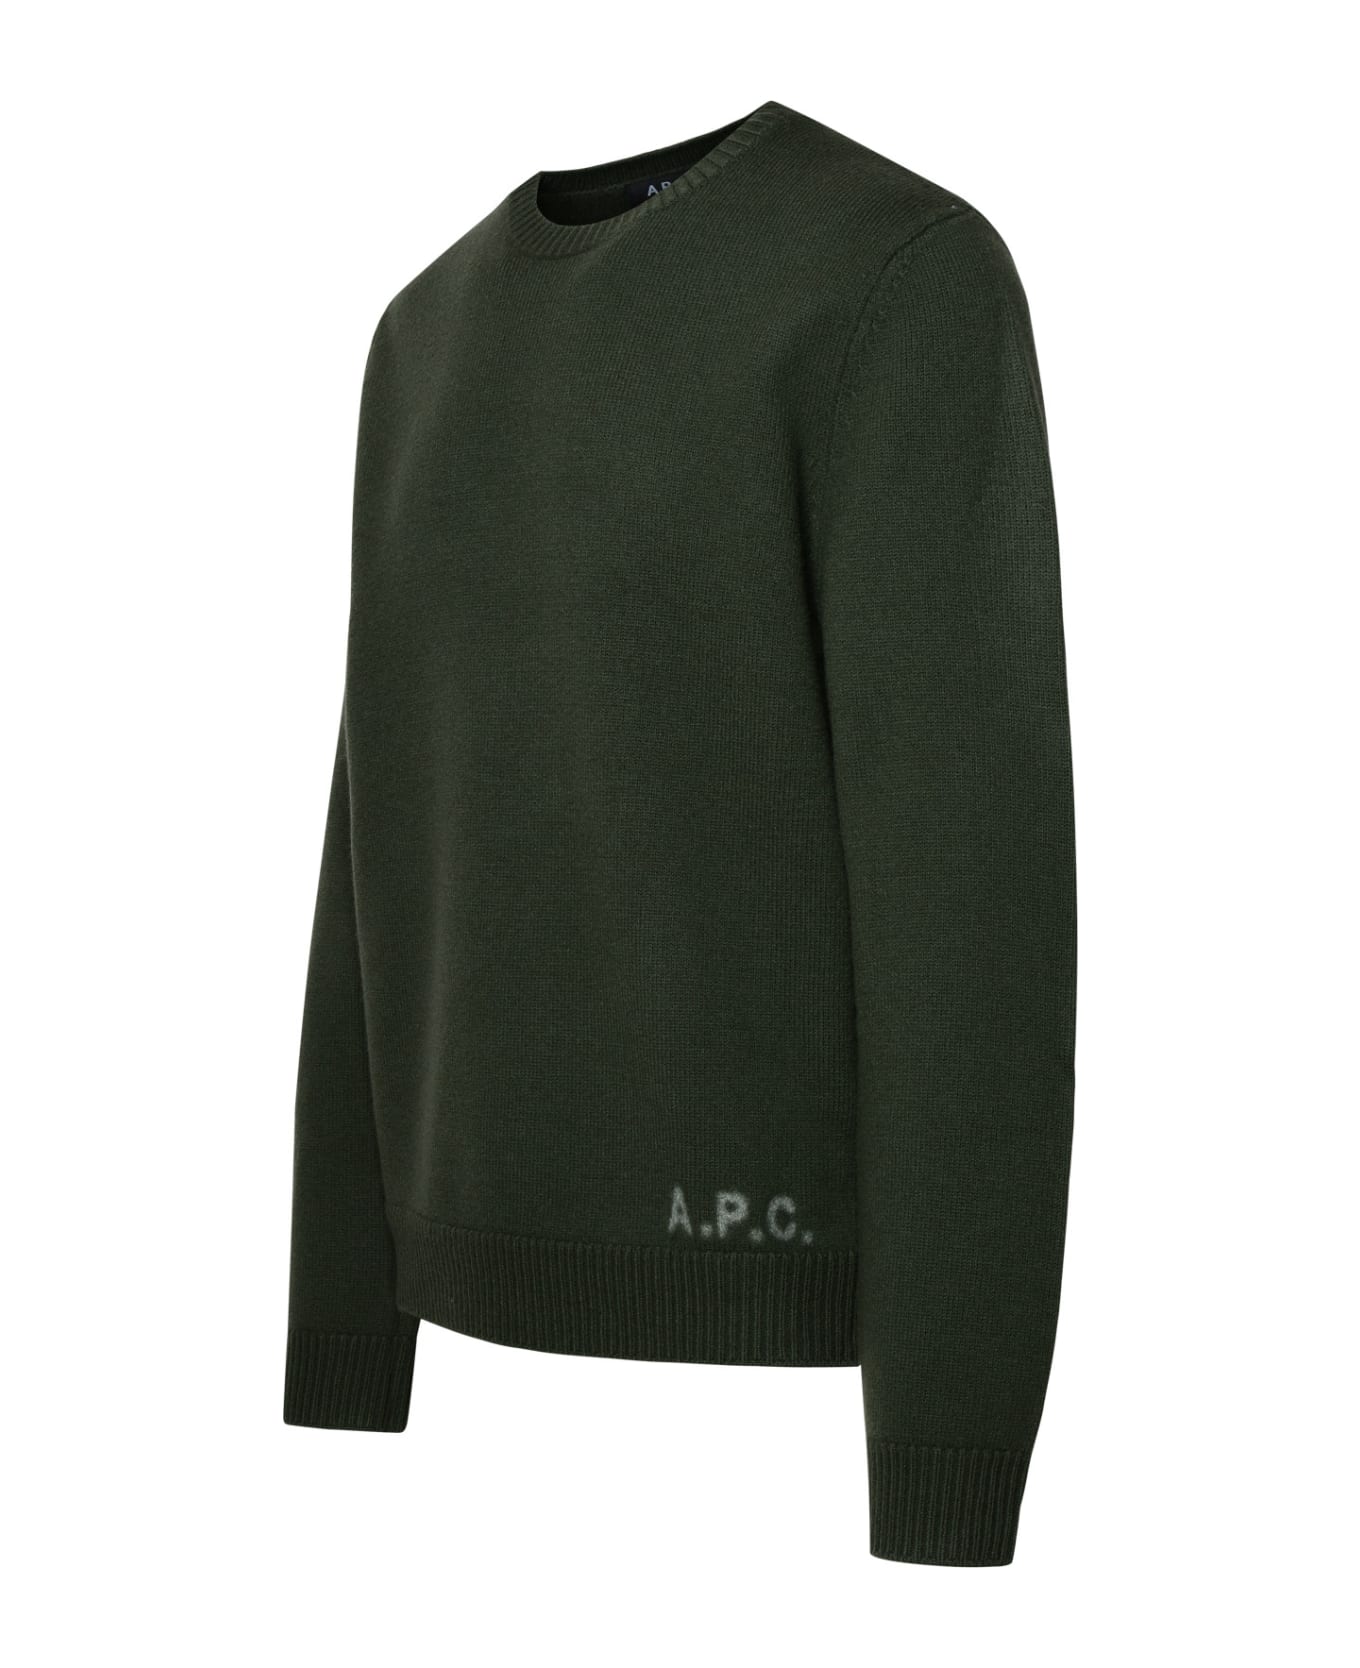 A.P.C. Edward Sweater In Green Wool - Green